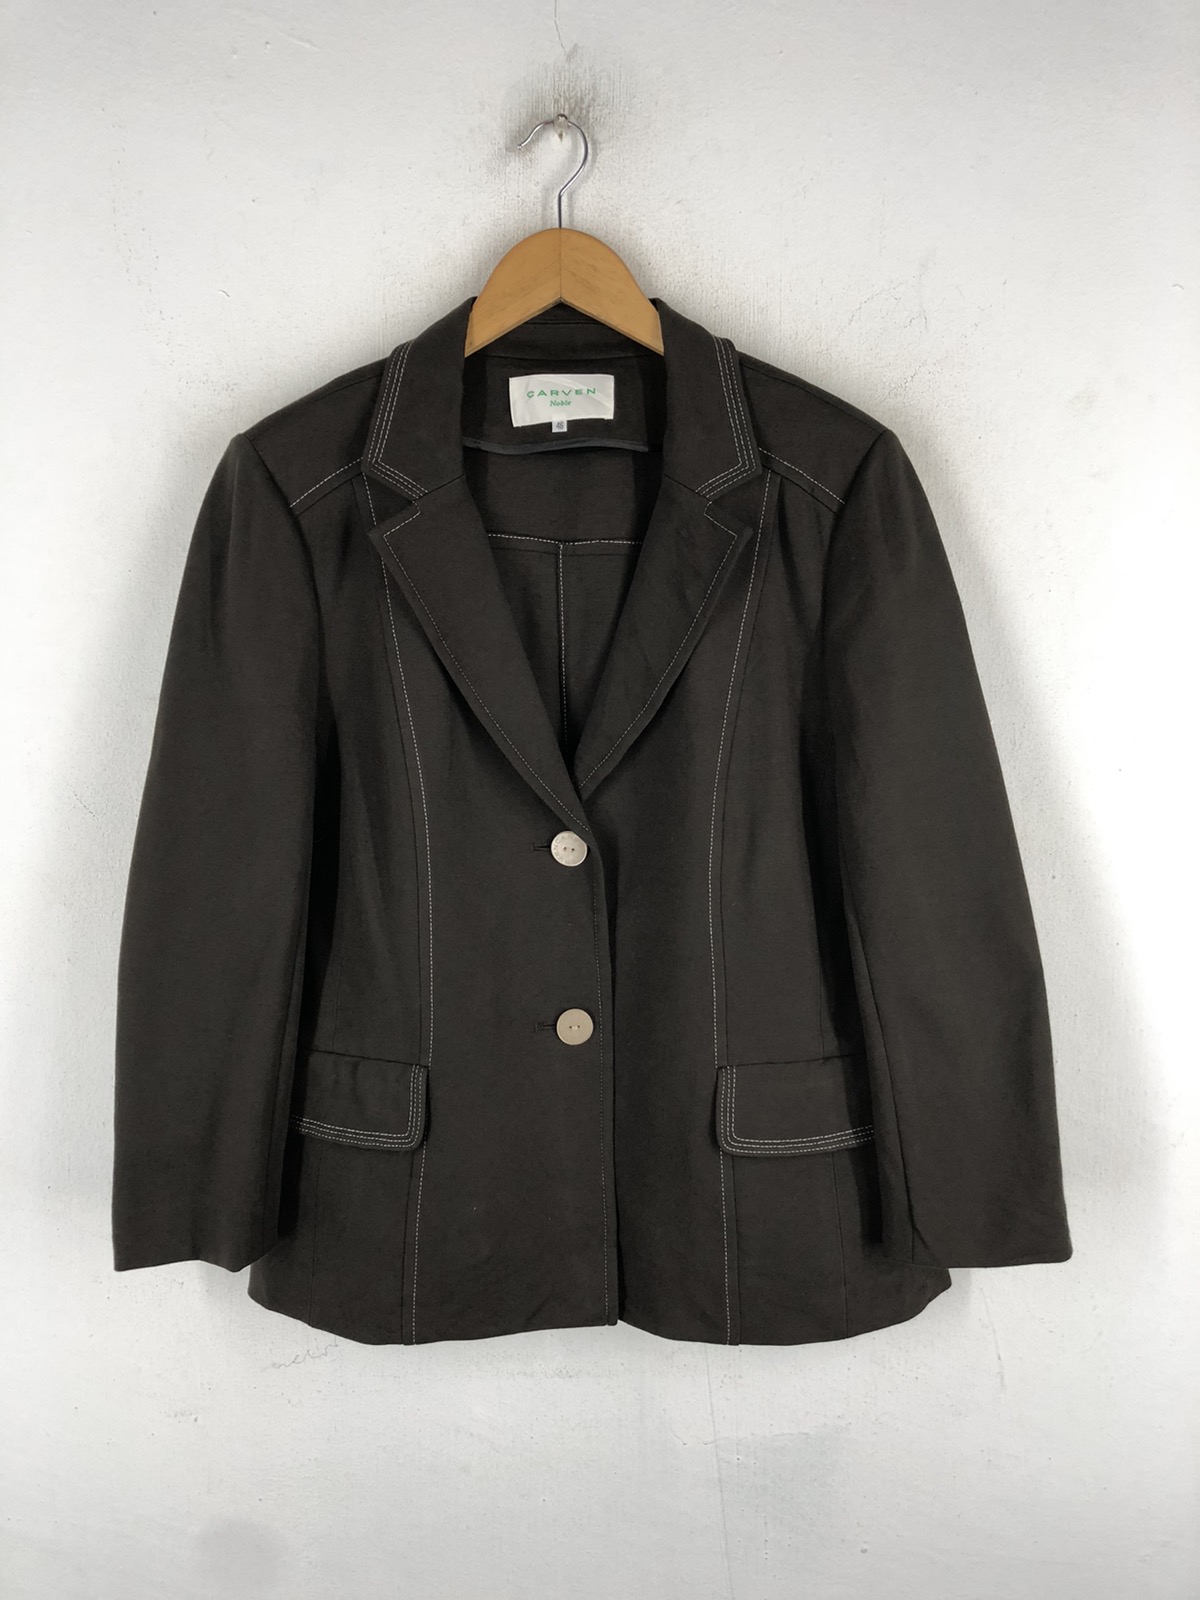 Carven noble jacket - 2